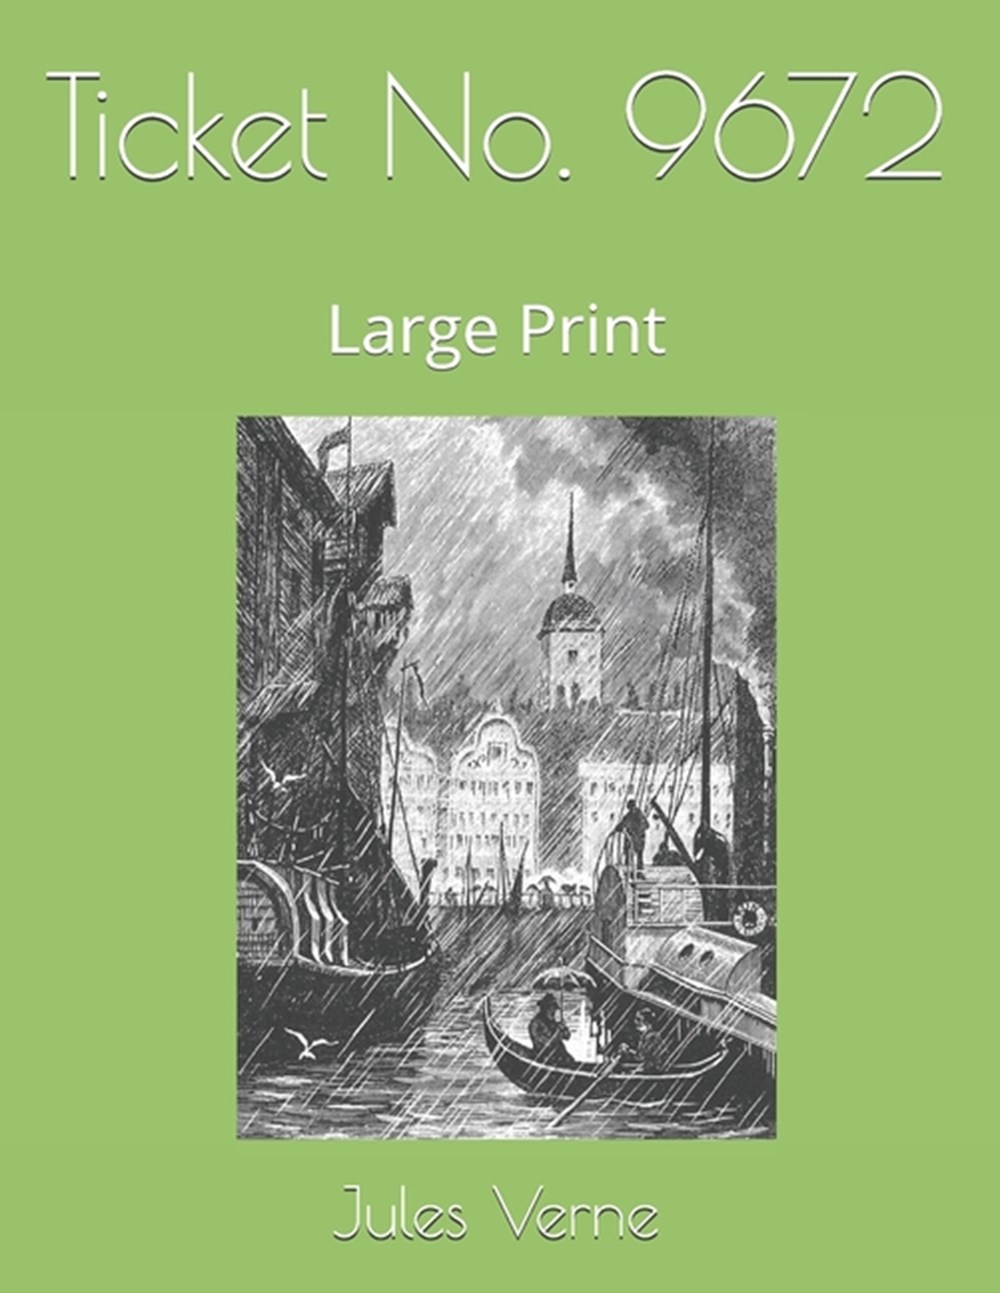 Ticket No. 9672 Large Print